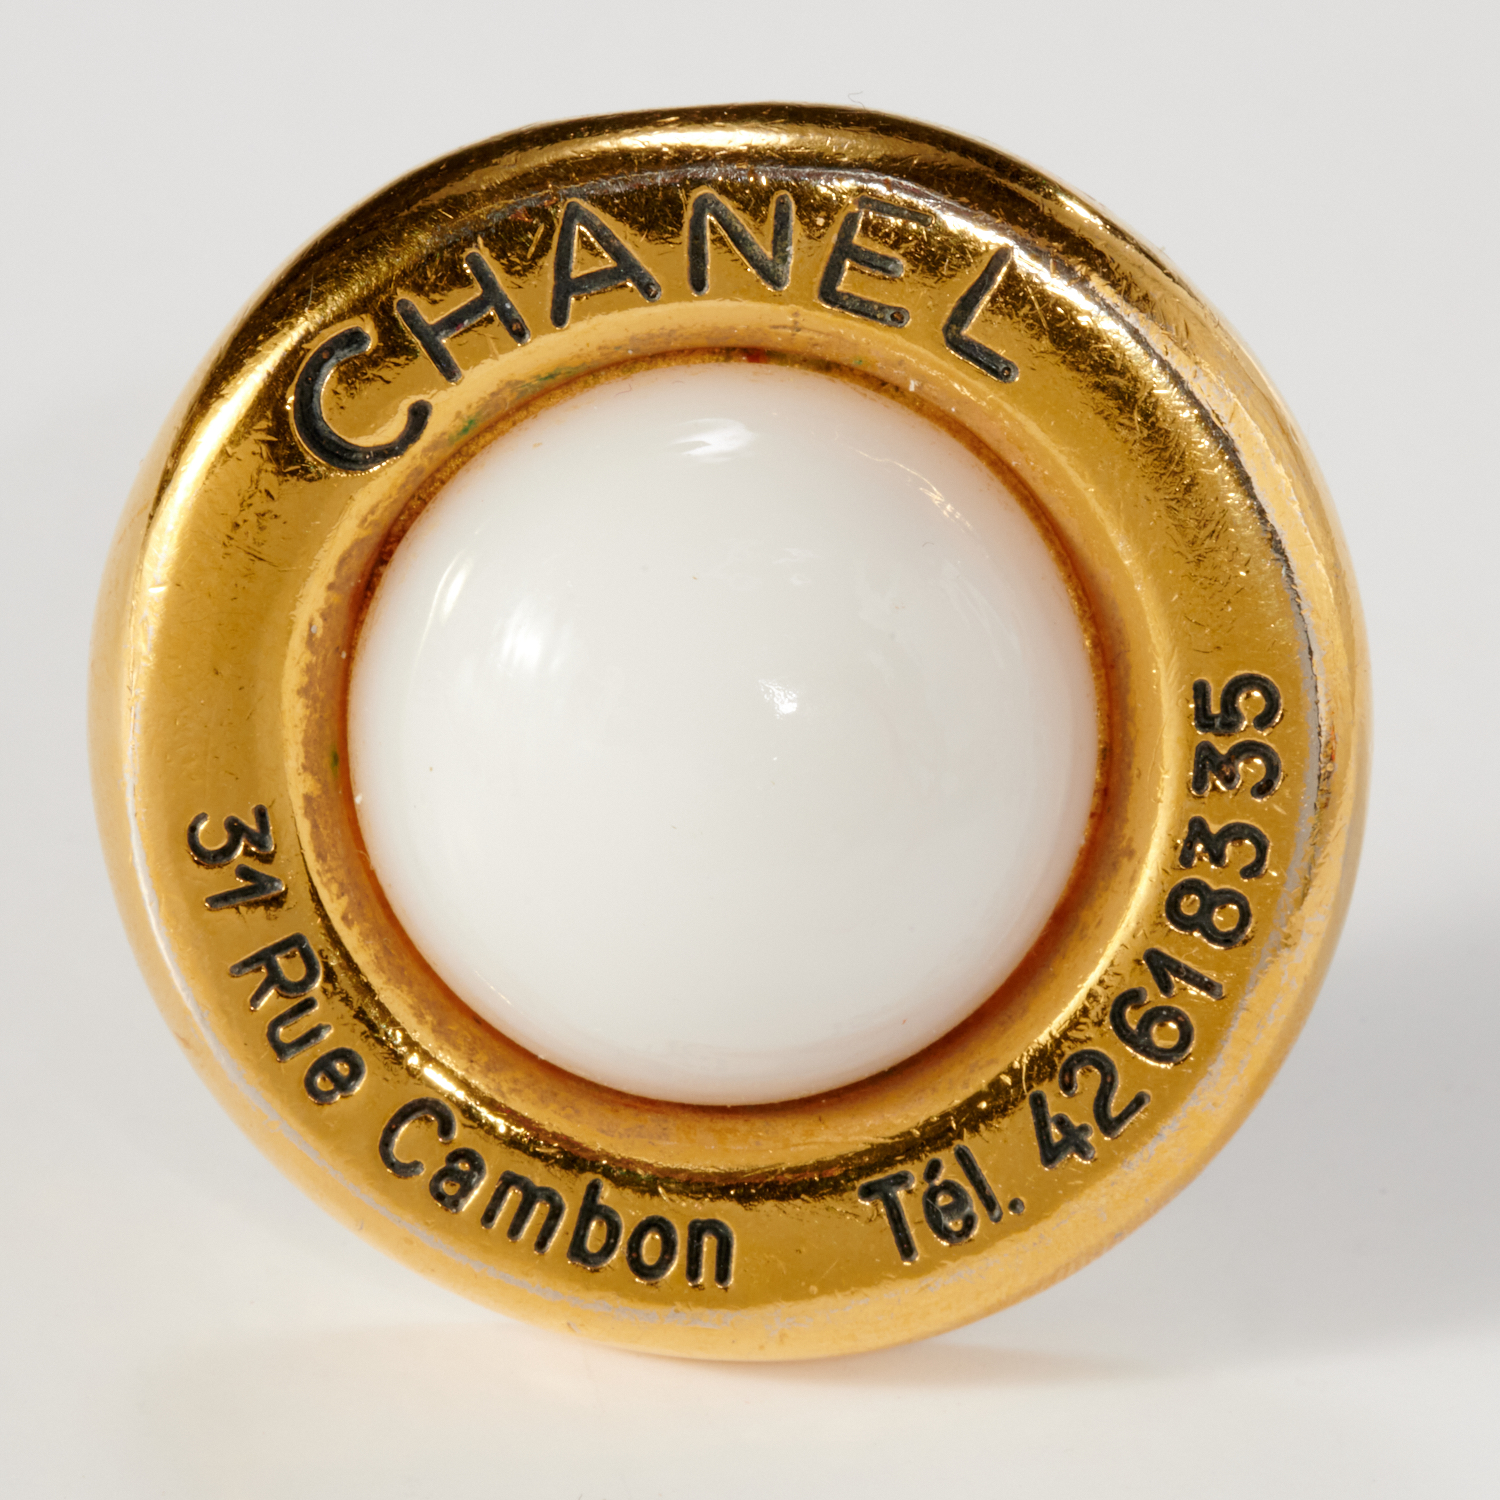 31 Rue Cambon: Coco Chanel's Fabulous Paris Flat : NPR